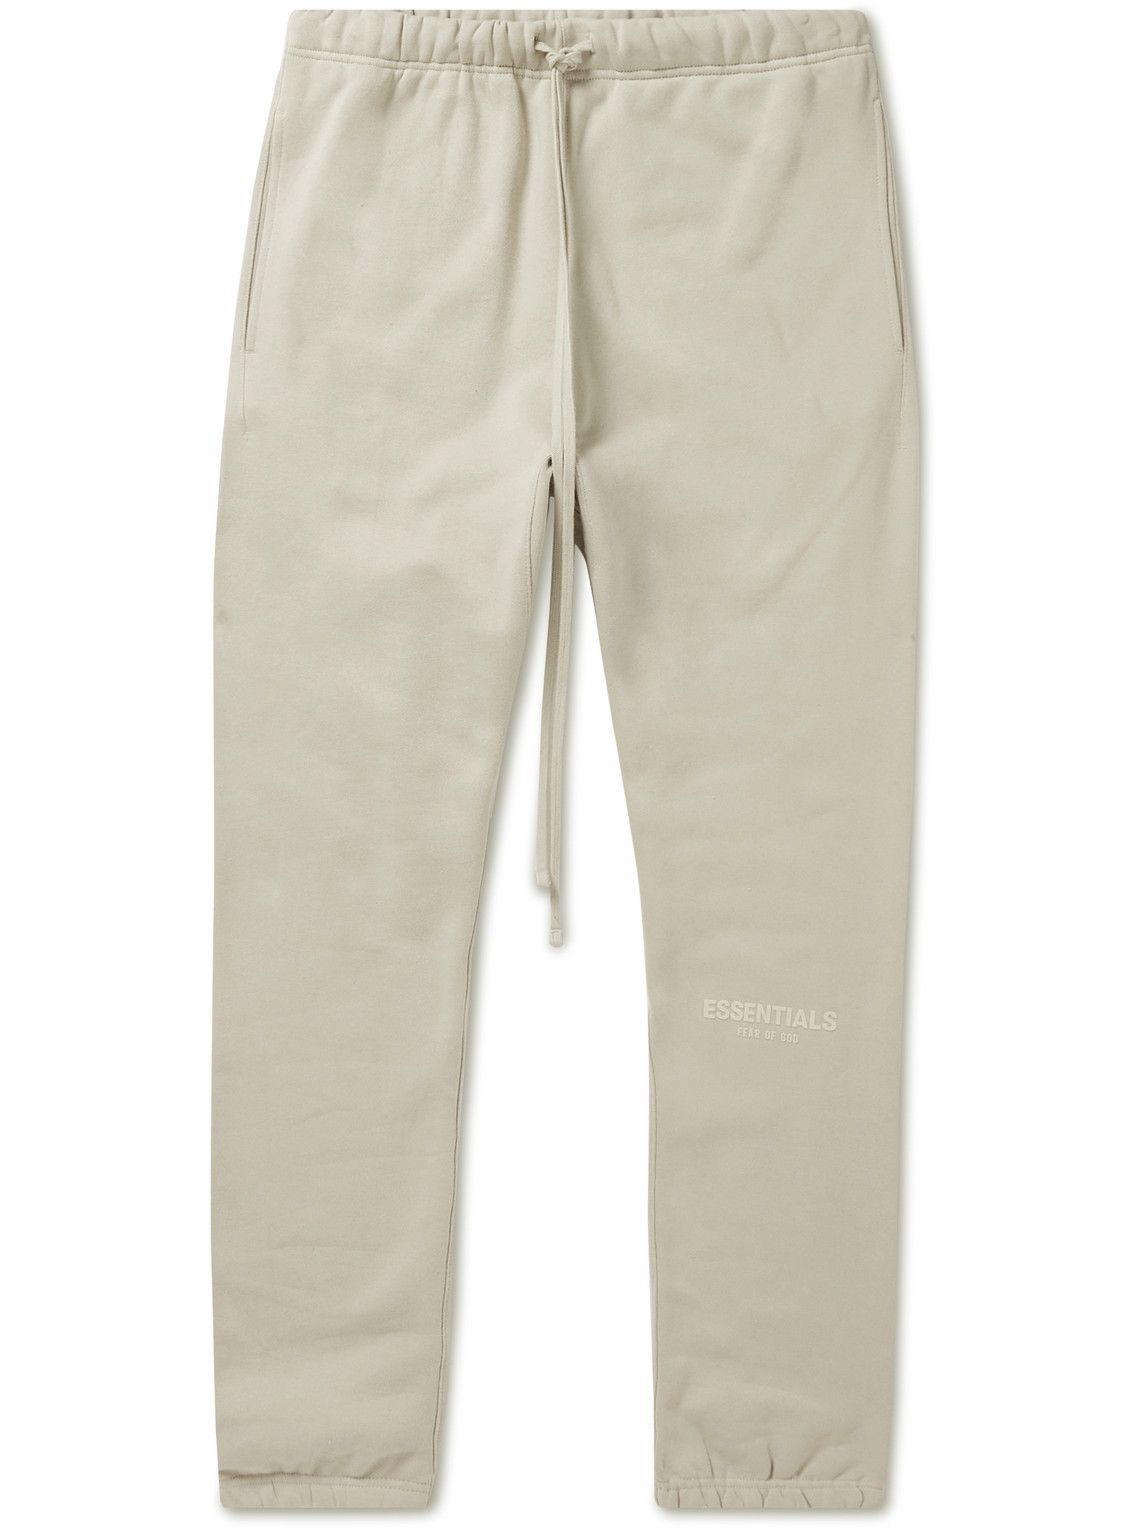 FEAR OF GOD ESSENTIALS Tapered Logo-Flocked Cotton-Blend Jersey Sweatpants  for Men